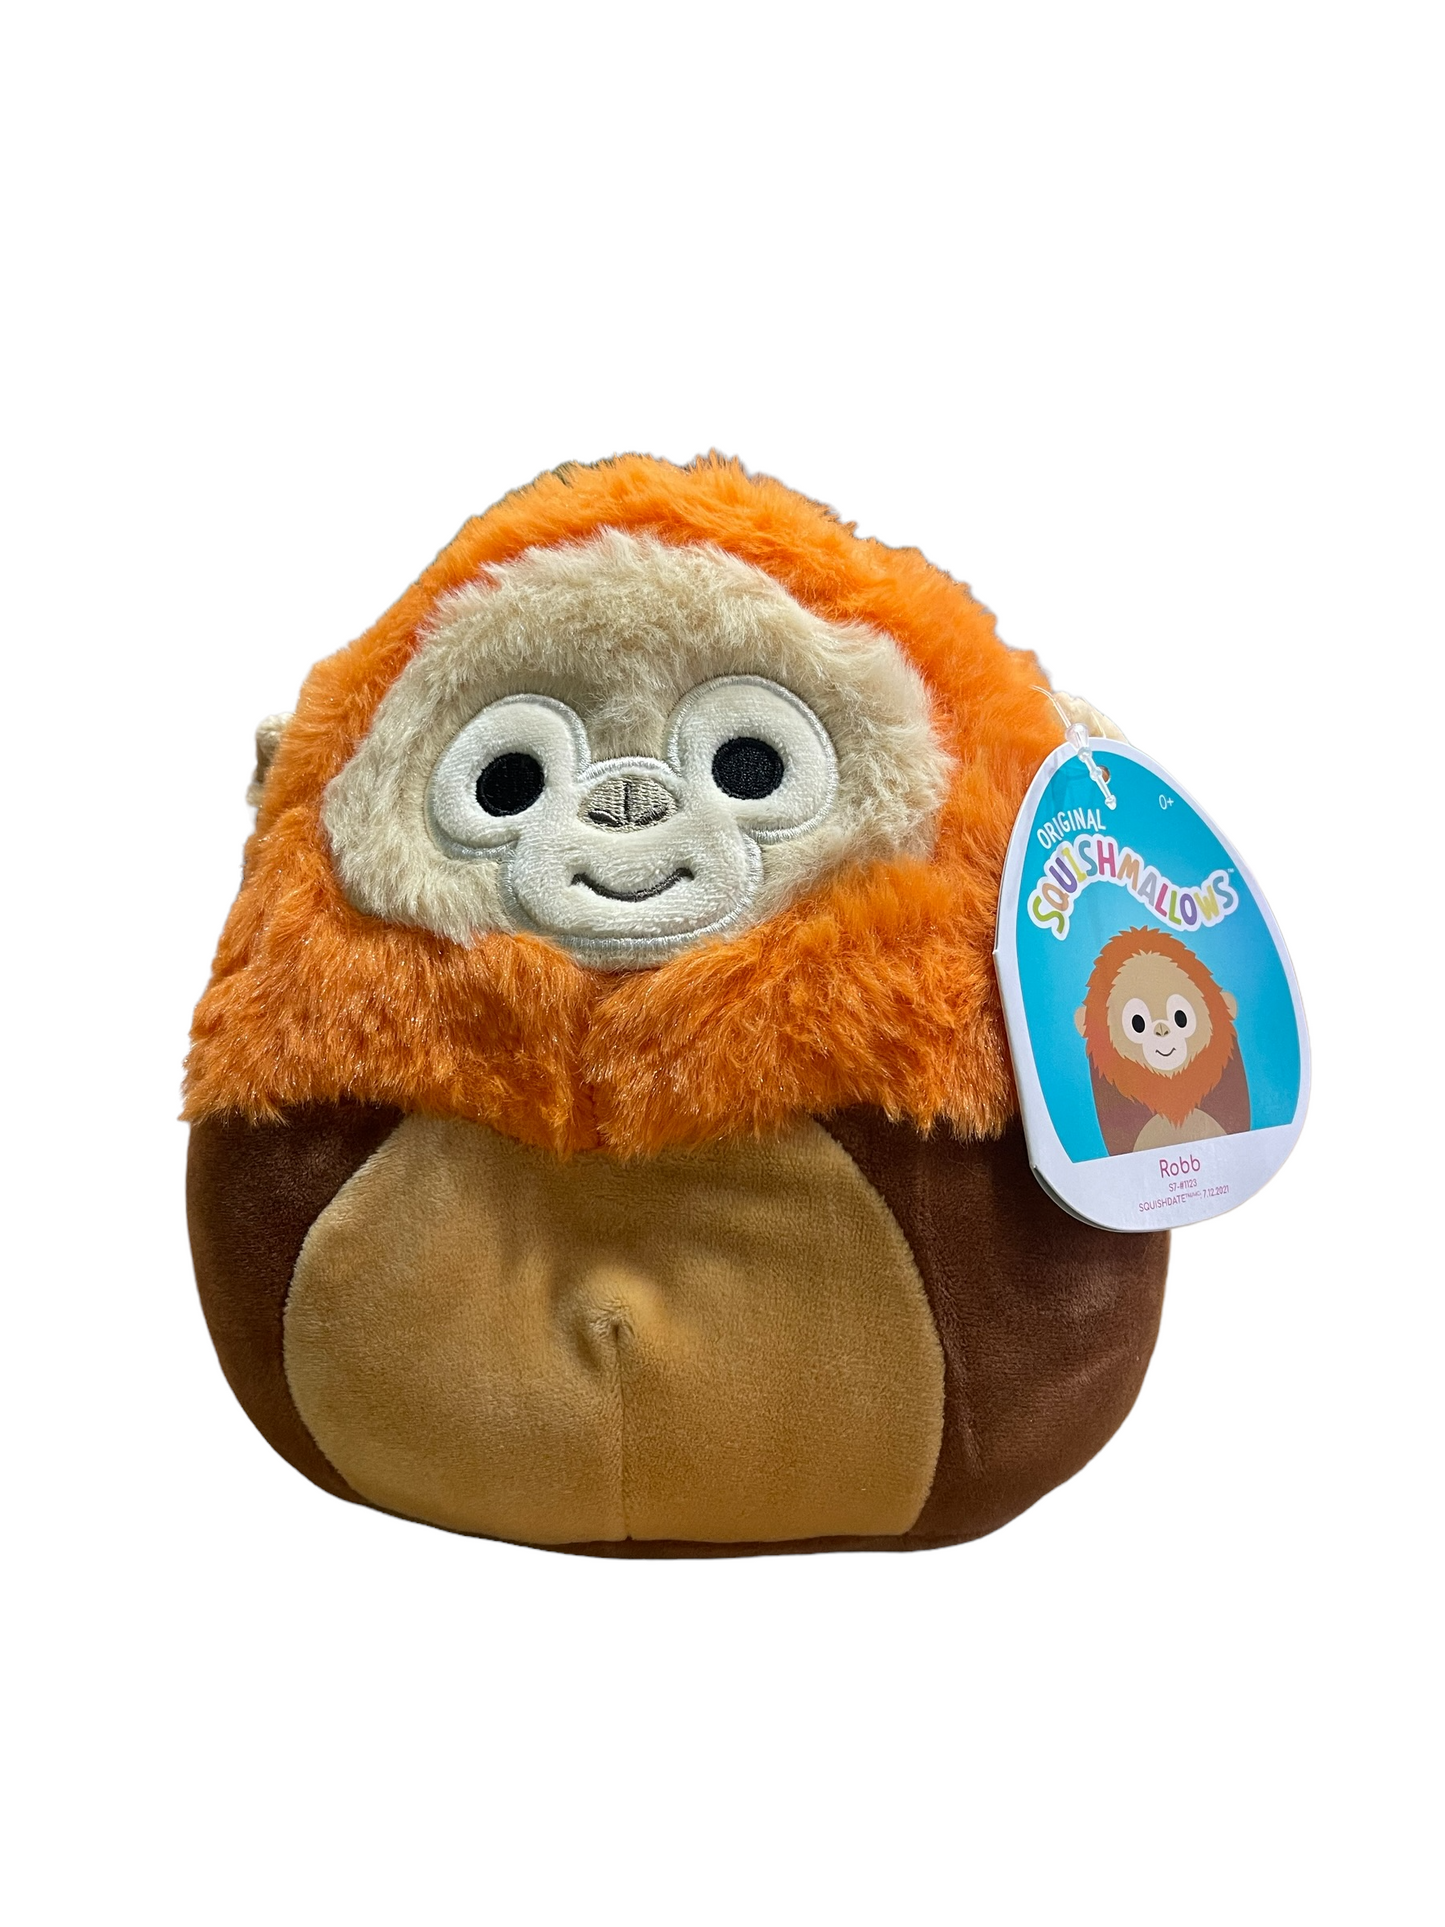 7” Robb the Orangutan